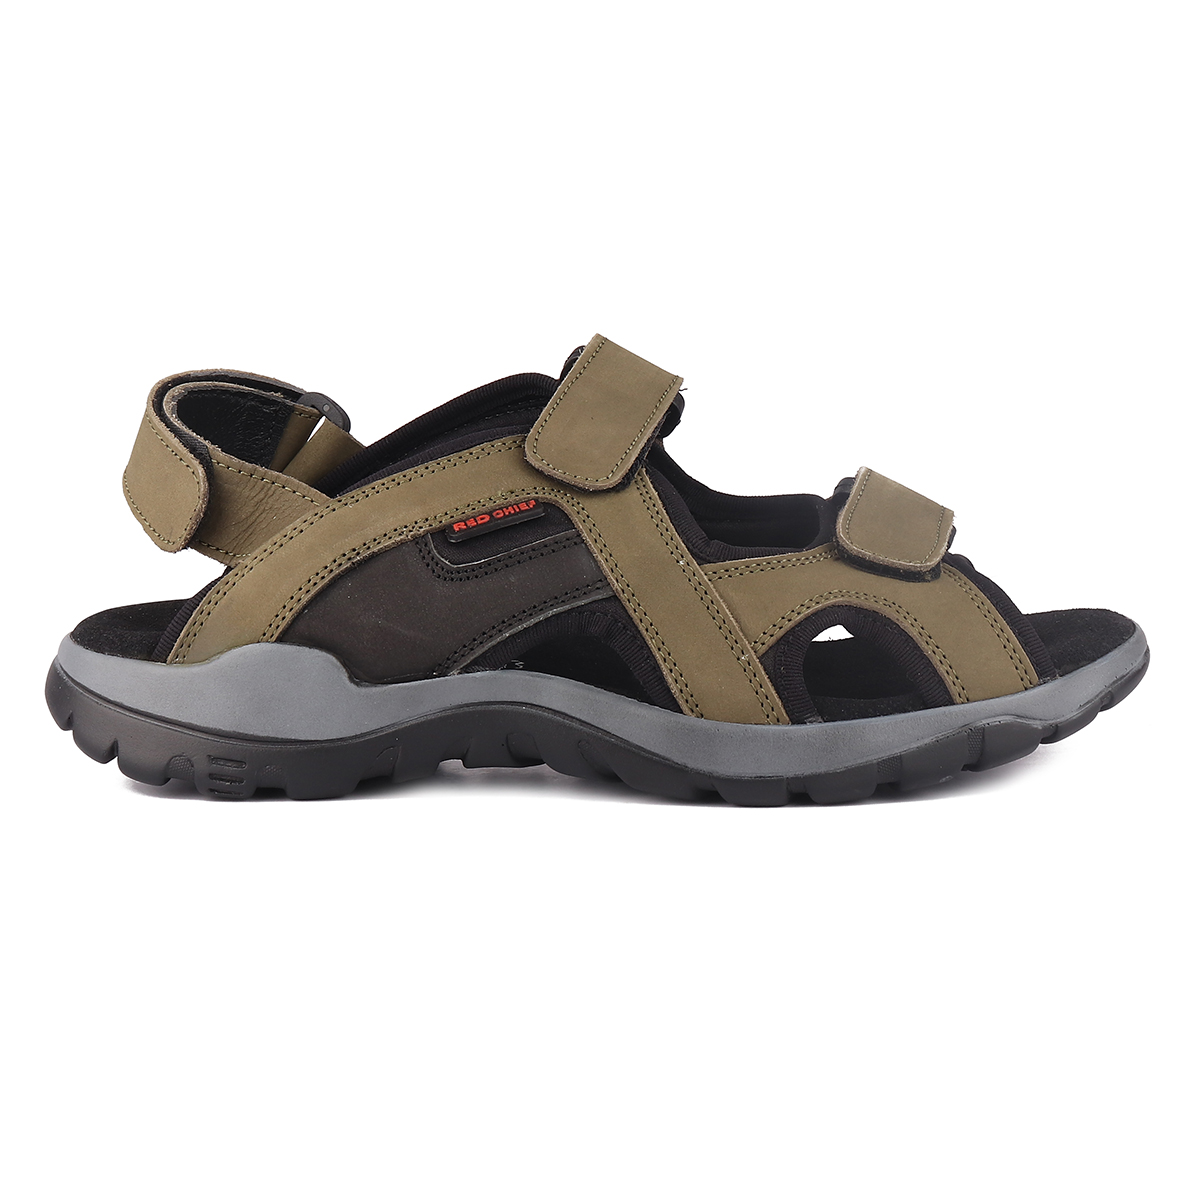 The Men's Store Bloomingdales Smith Slide Sandals | eBay